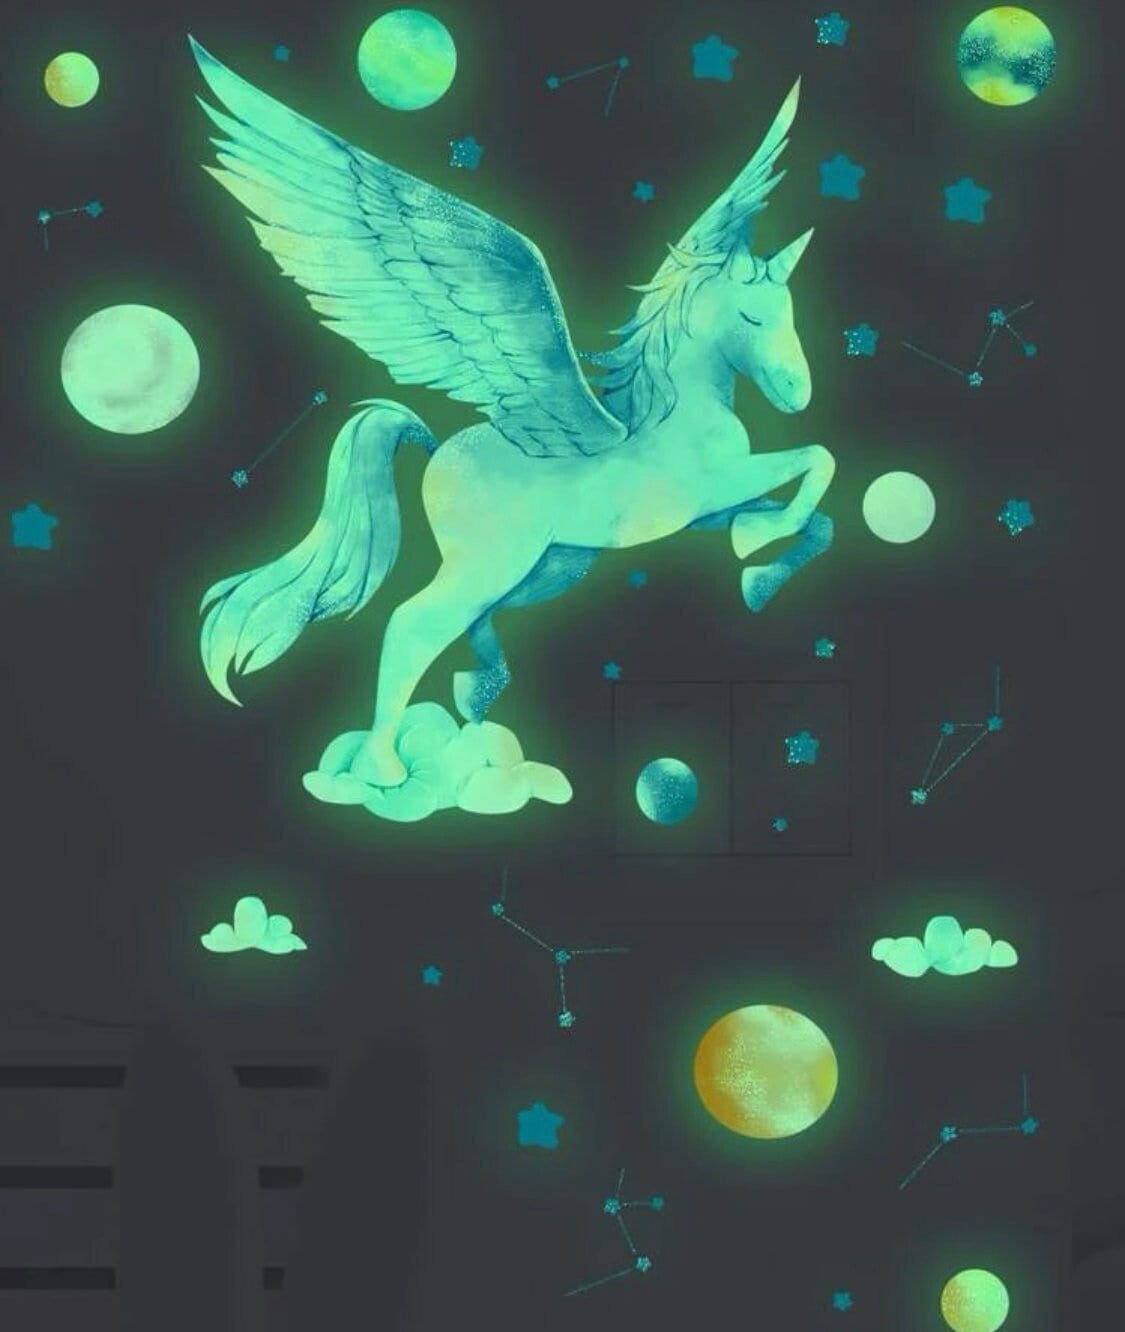 Glow in the Darkluminous Wall Stickers Stars Moon Castle Unicorn